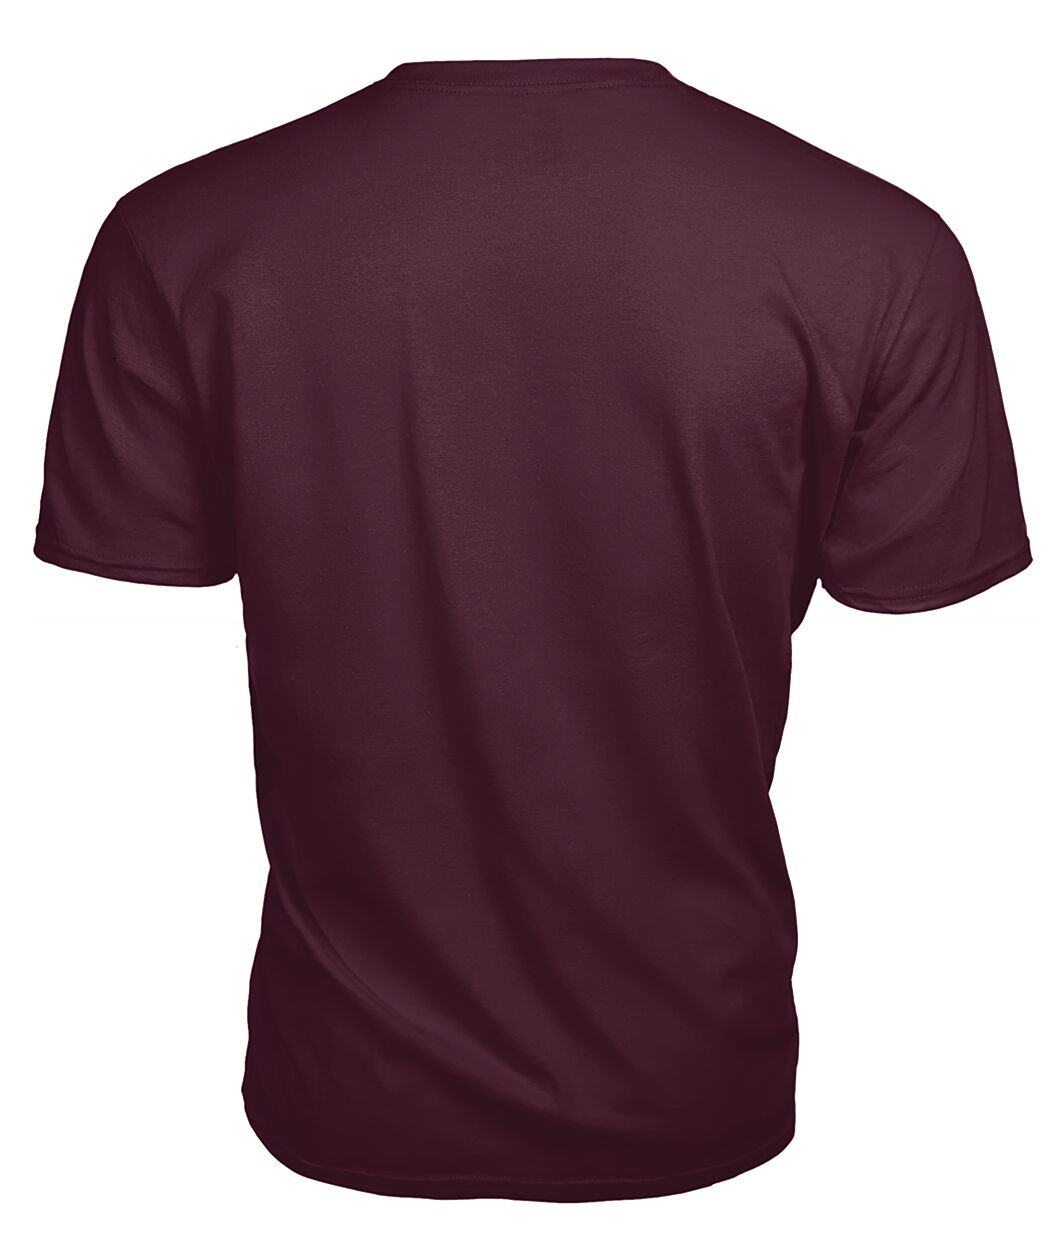 Munro Family Tartan - 2D T-shirt